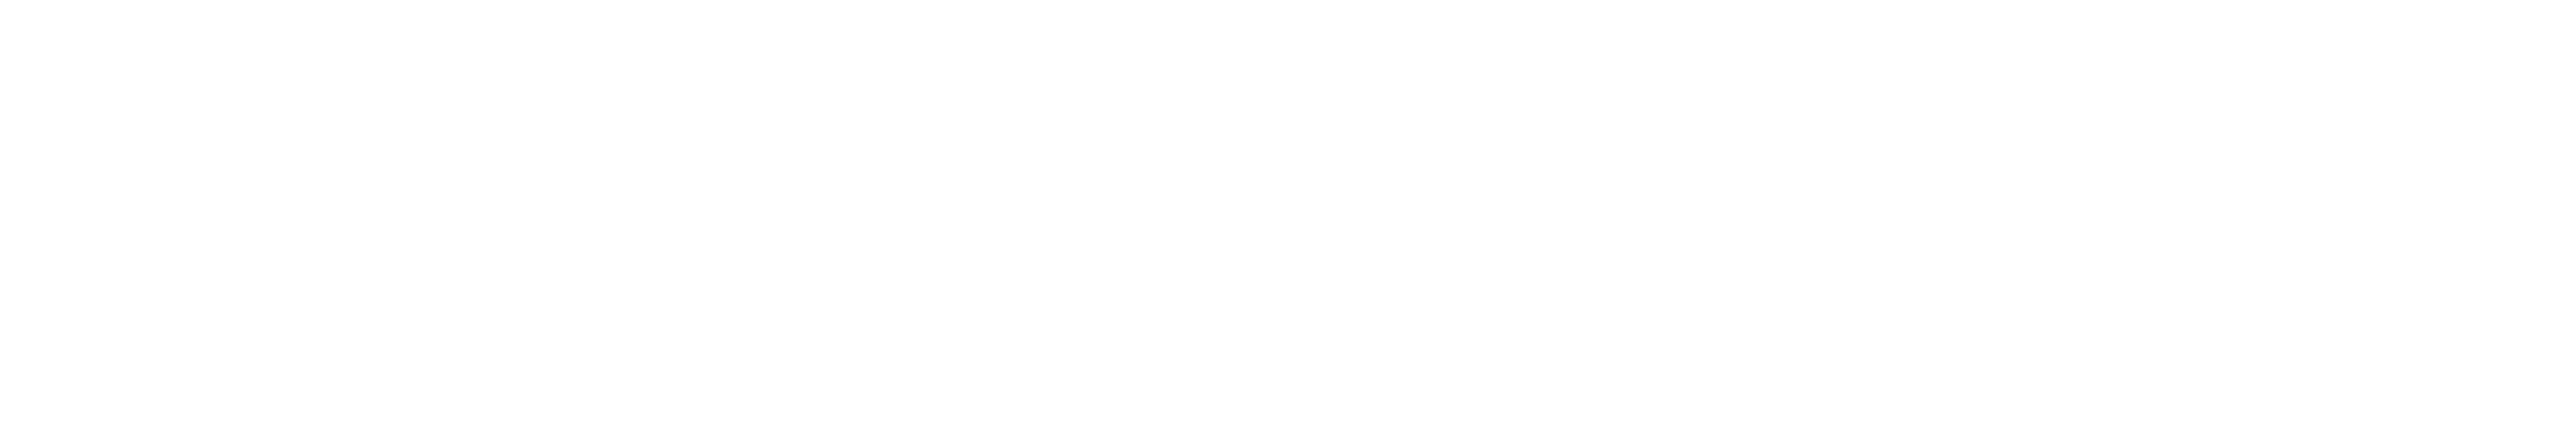 LAW.COM